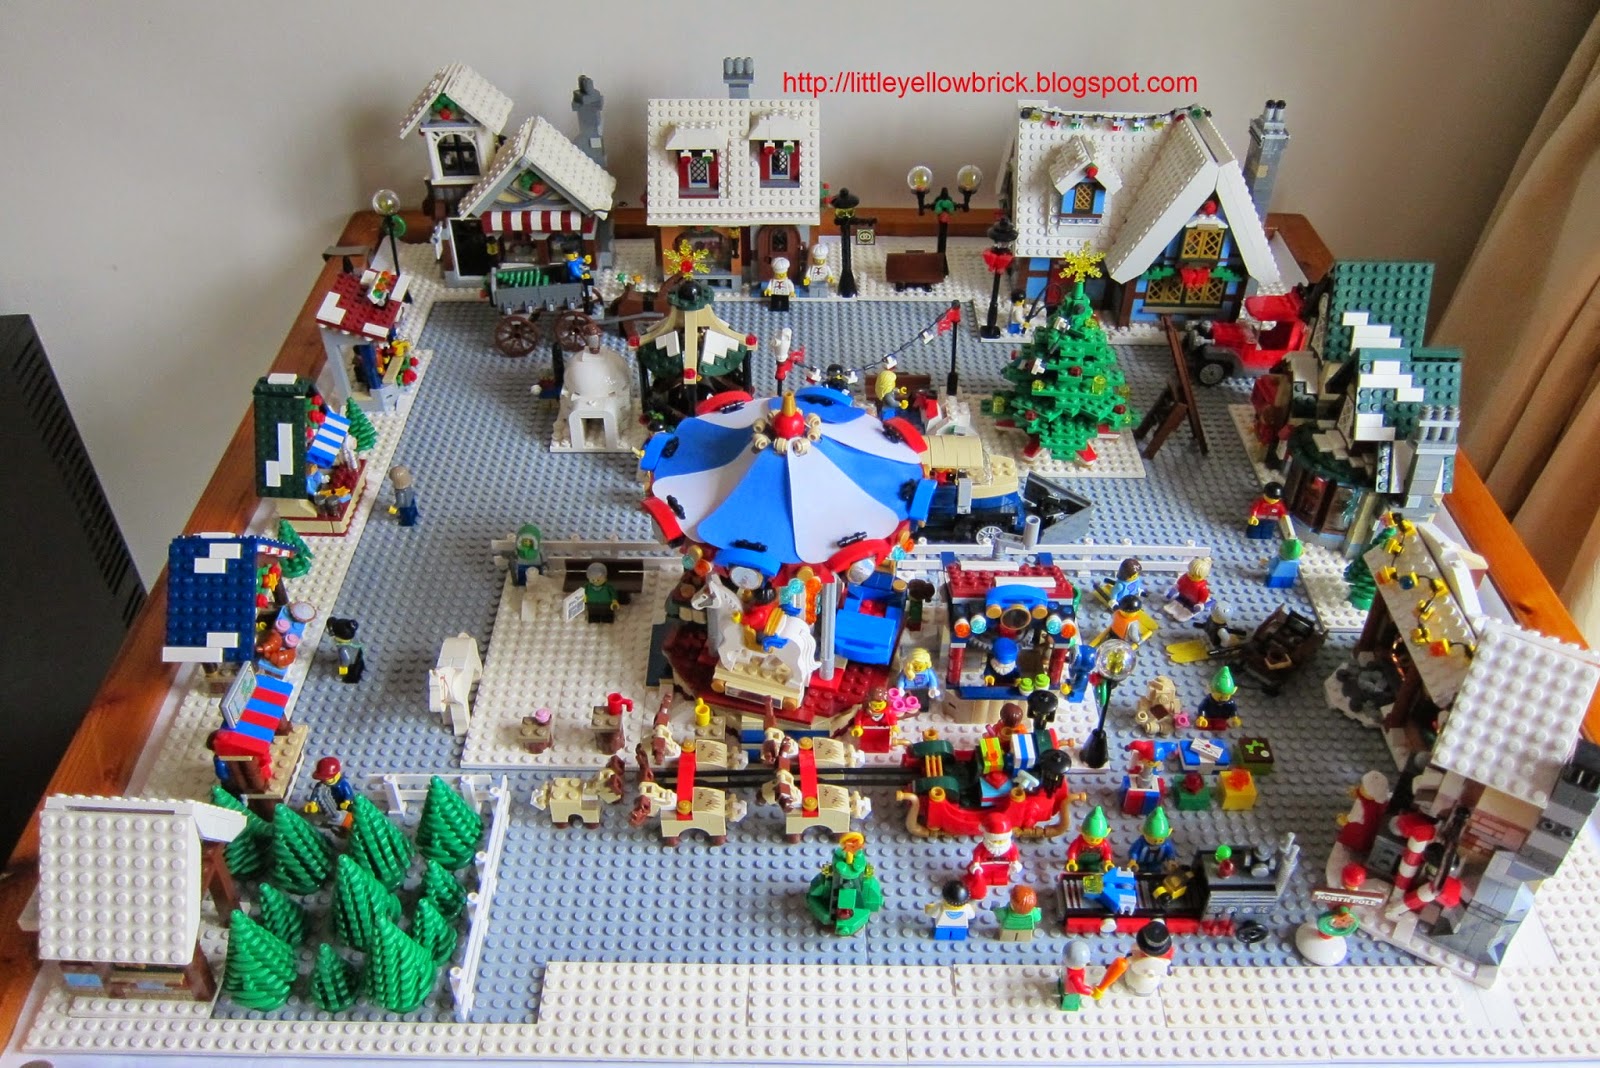 LEGO Creator Expert Winter Village Post Office Set 10222 - US